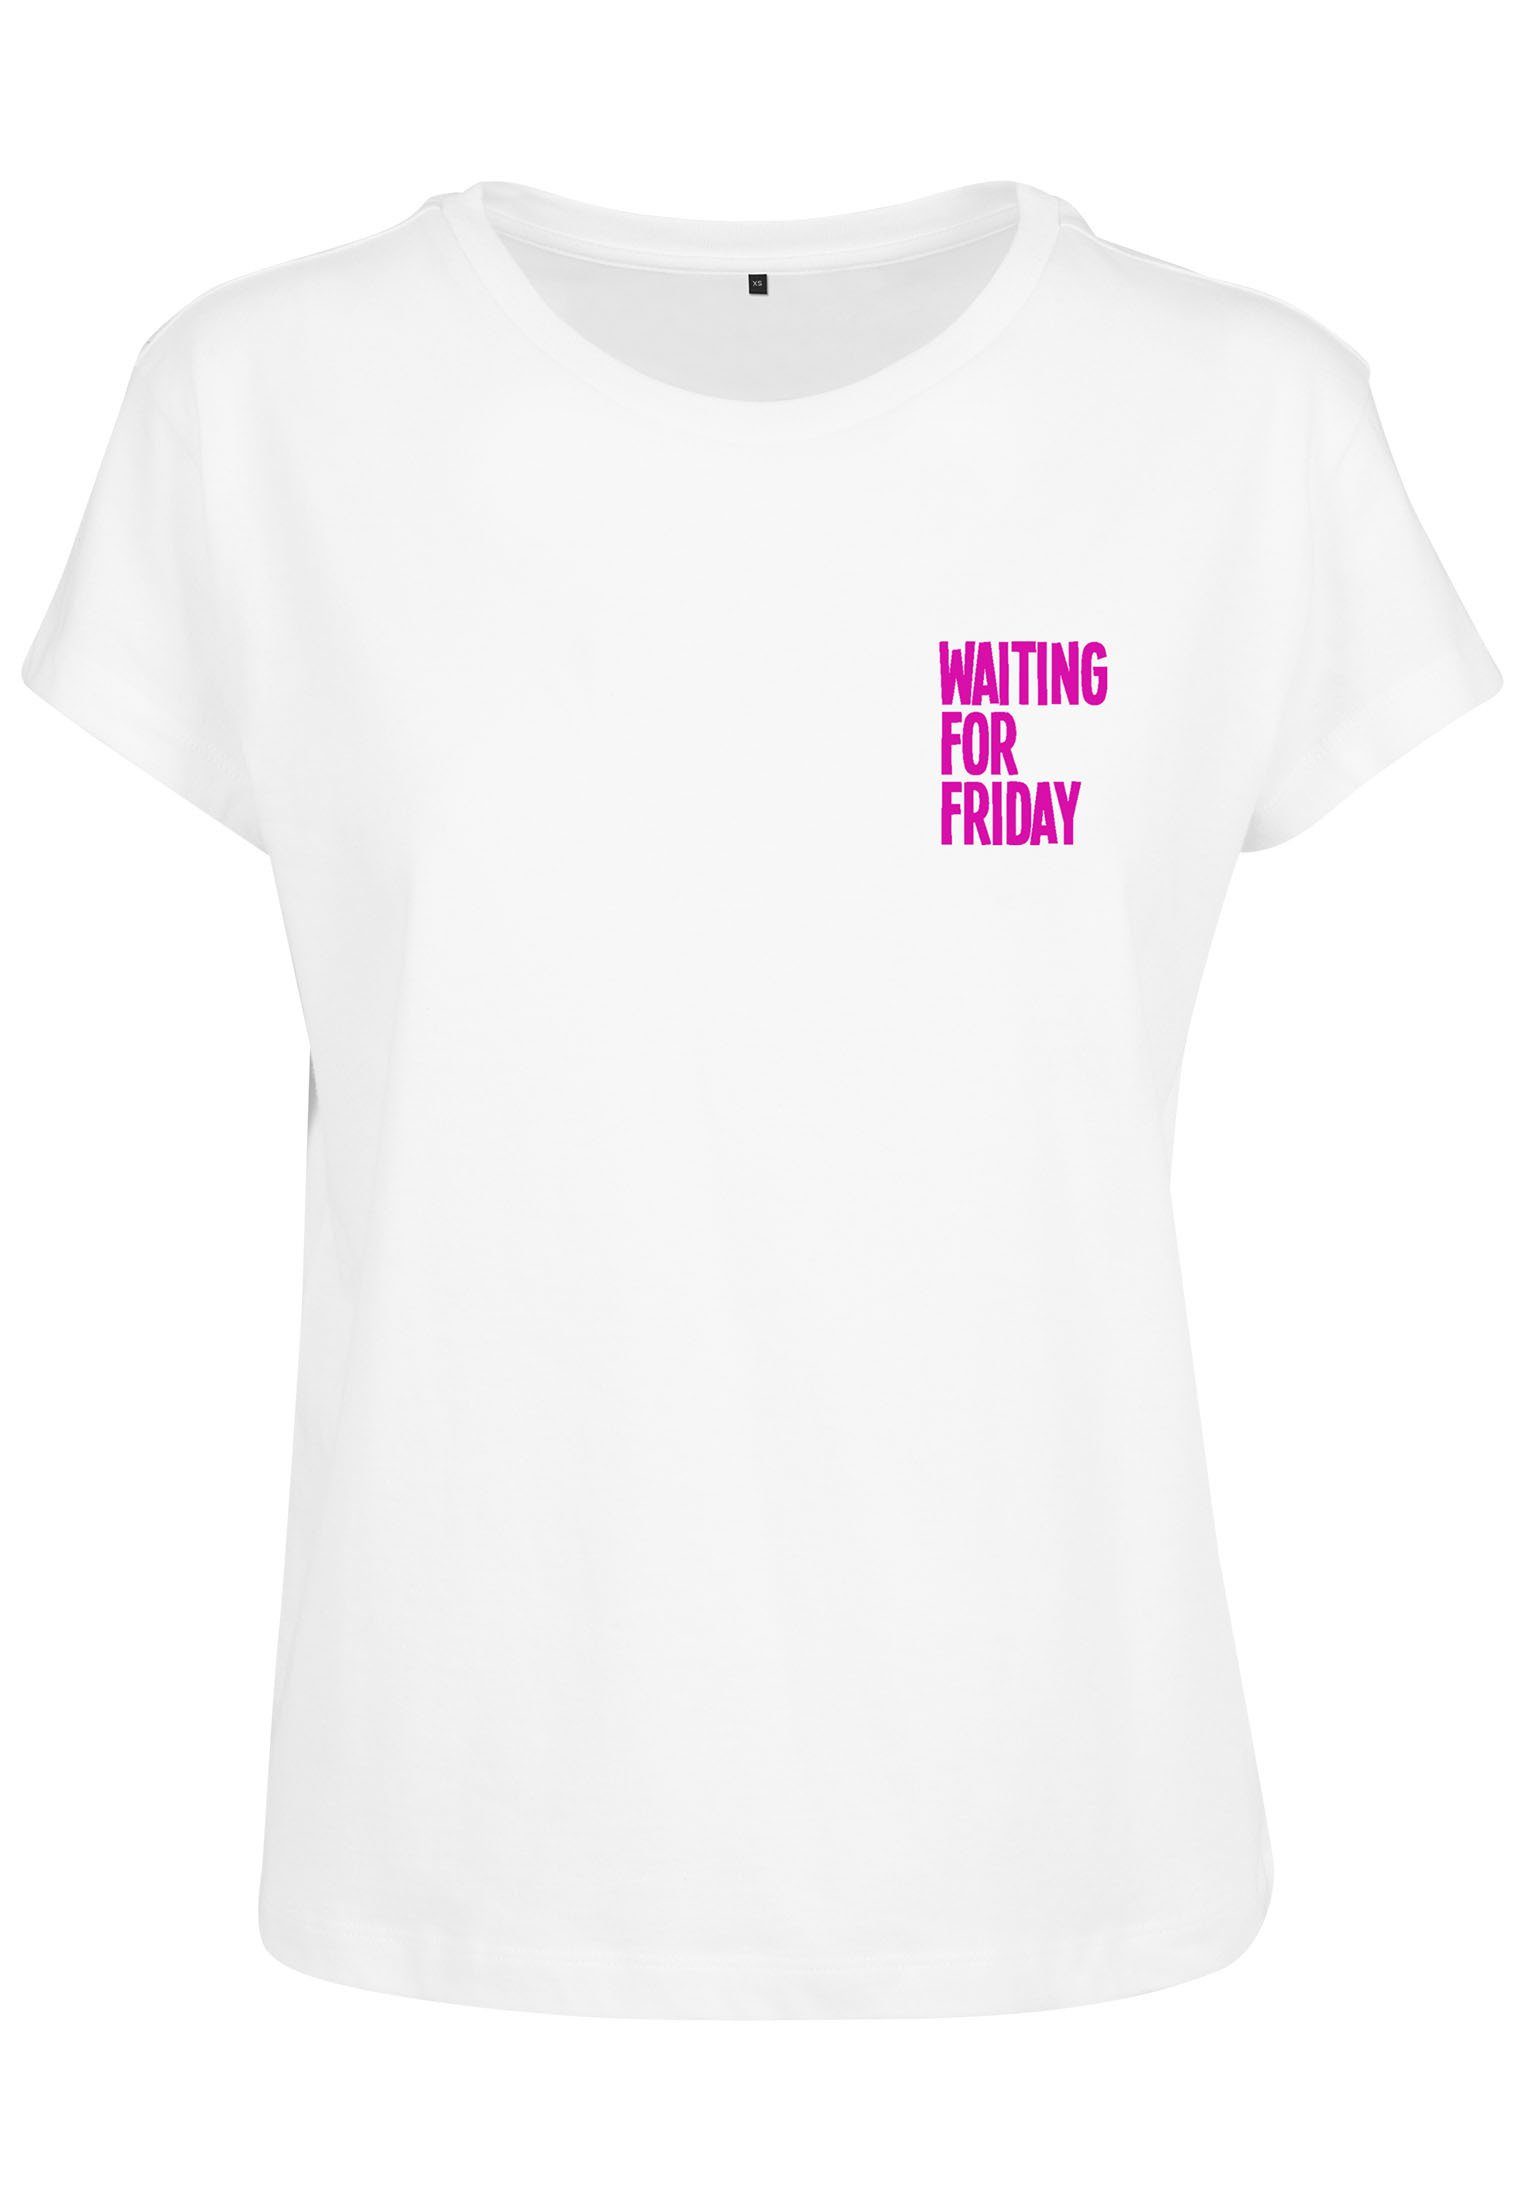 For Waiting Friday Tee white/pink Mister Damen T-Shirt Ladies Tee Box (1-tlg) MisterTee